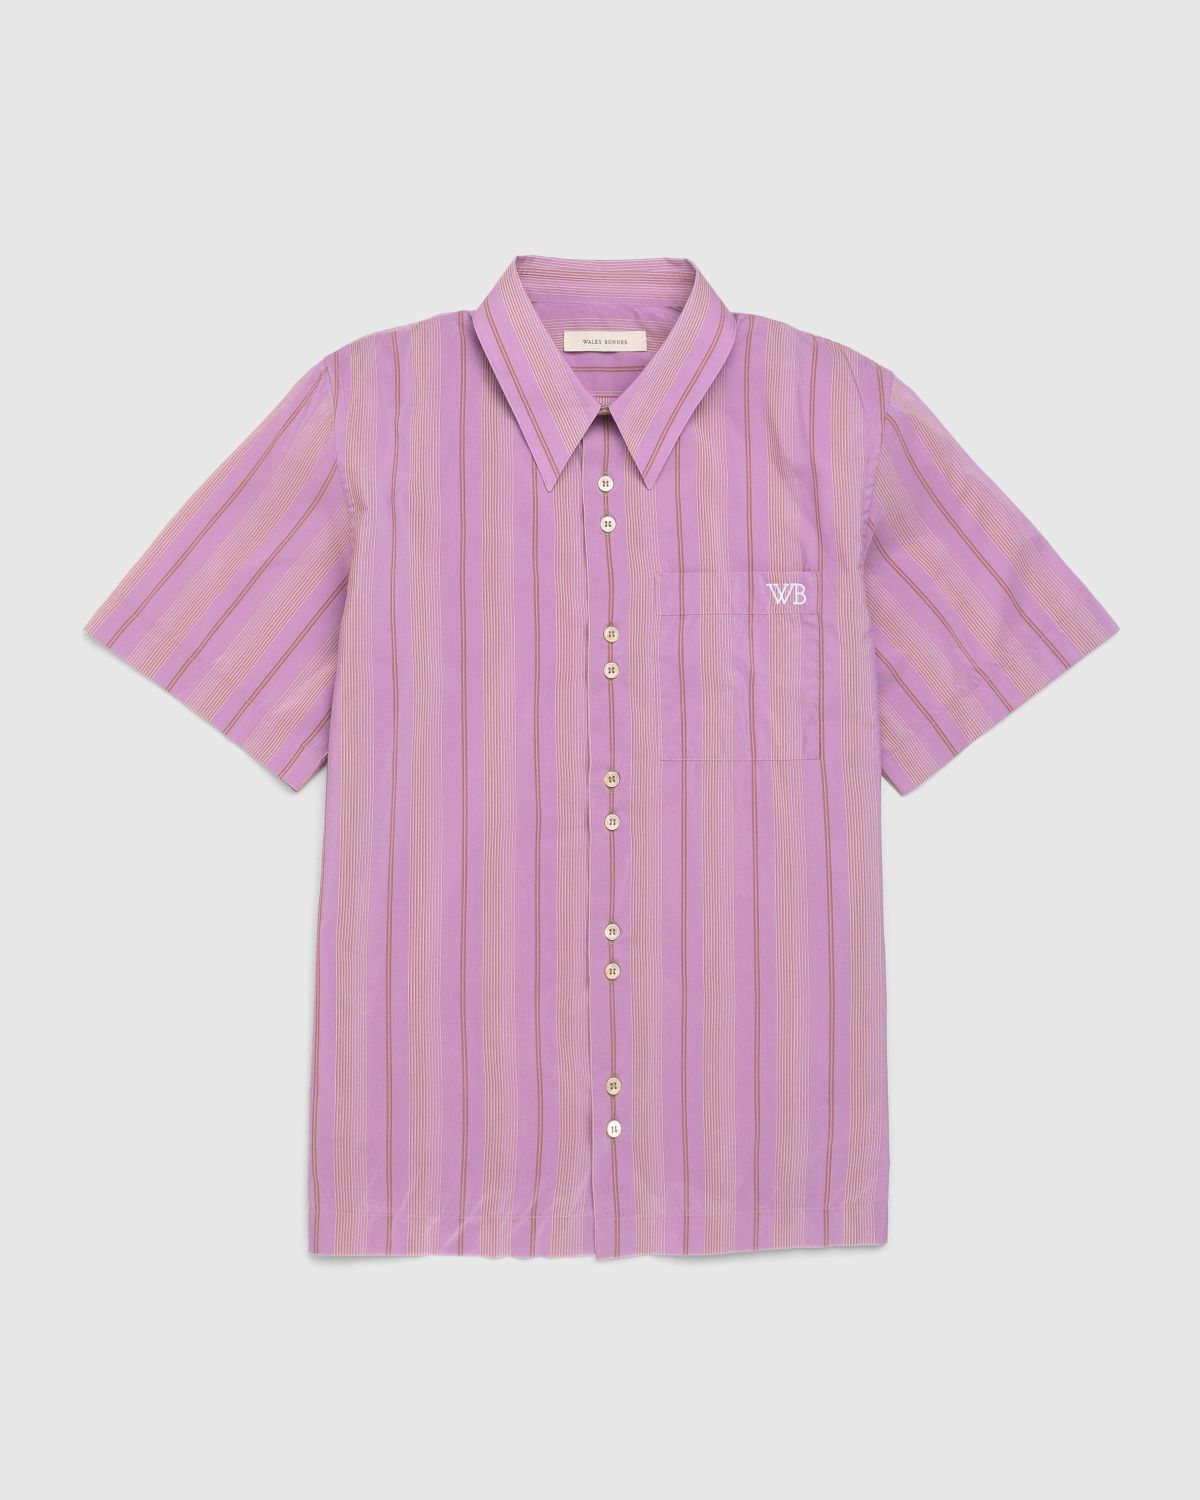 Wales Bonner – Rhythm Striped Shirt Pink - Shortsleeve Shirts - Pink - Image 1